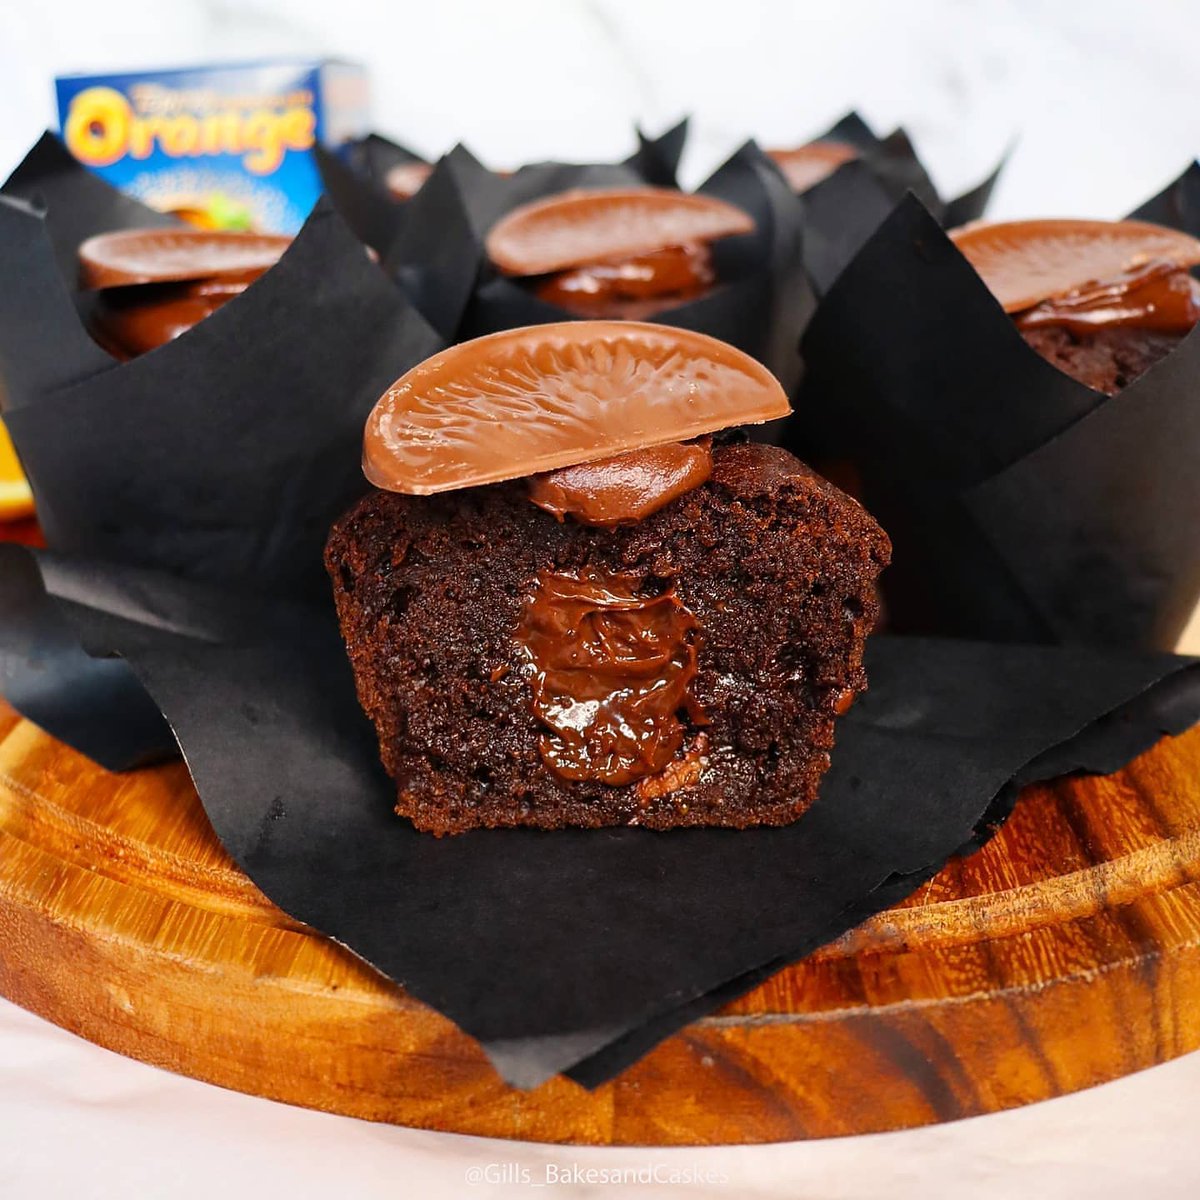 Terry's Chocolate Orange Muffins 🍊 ❤️ Recipe link - gillsbakesandcakes.com/terrys-chocola… . #baking #RecipeOfTheDay #easyrecipes #foodporn #recipes #chocolate #food #GBBO #homemade #bakeoff #gills_bakesandcakes